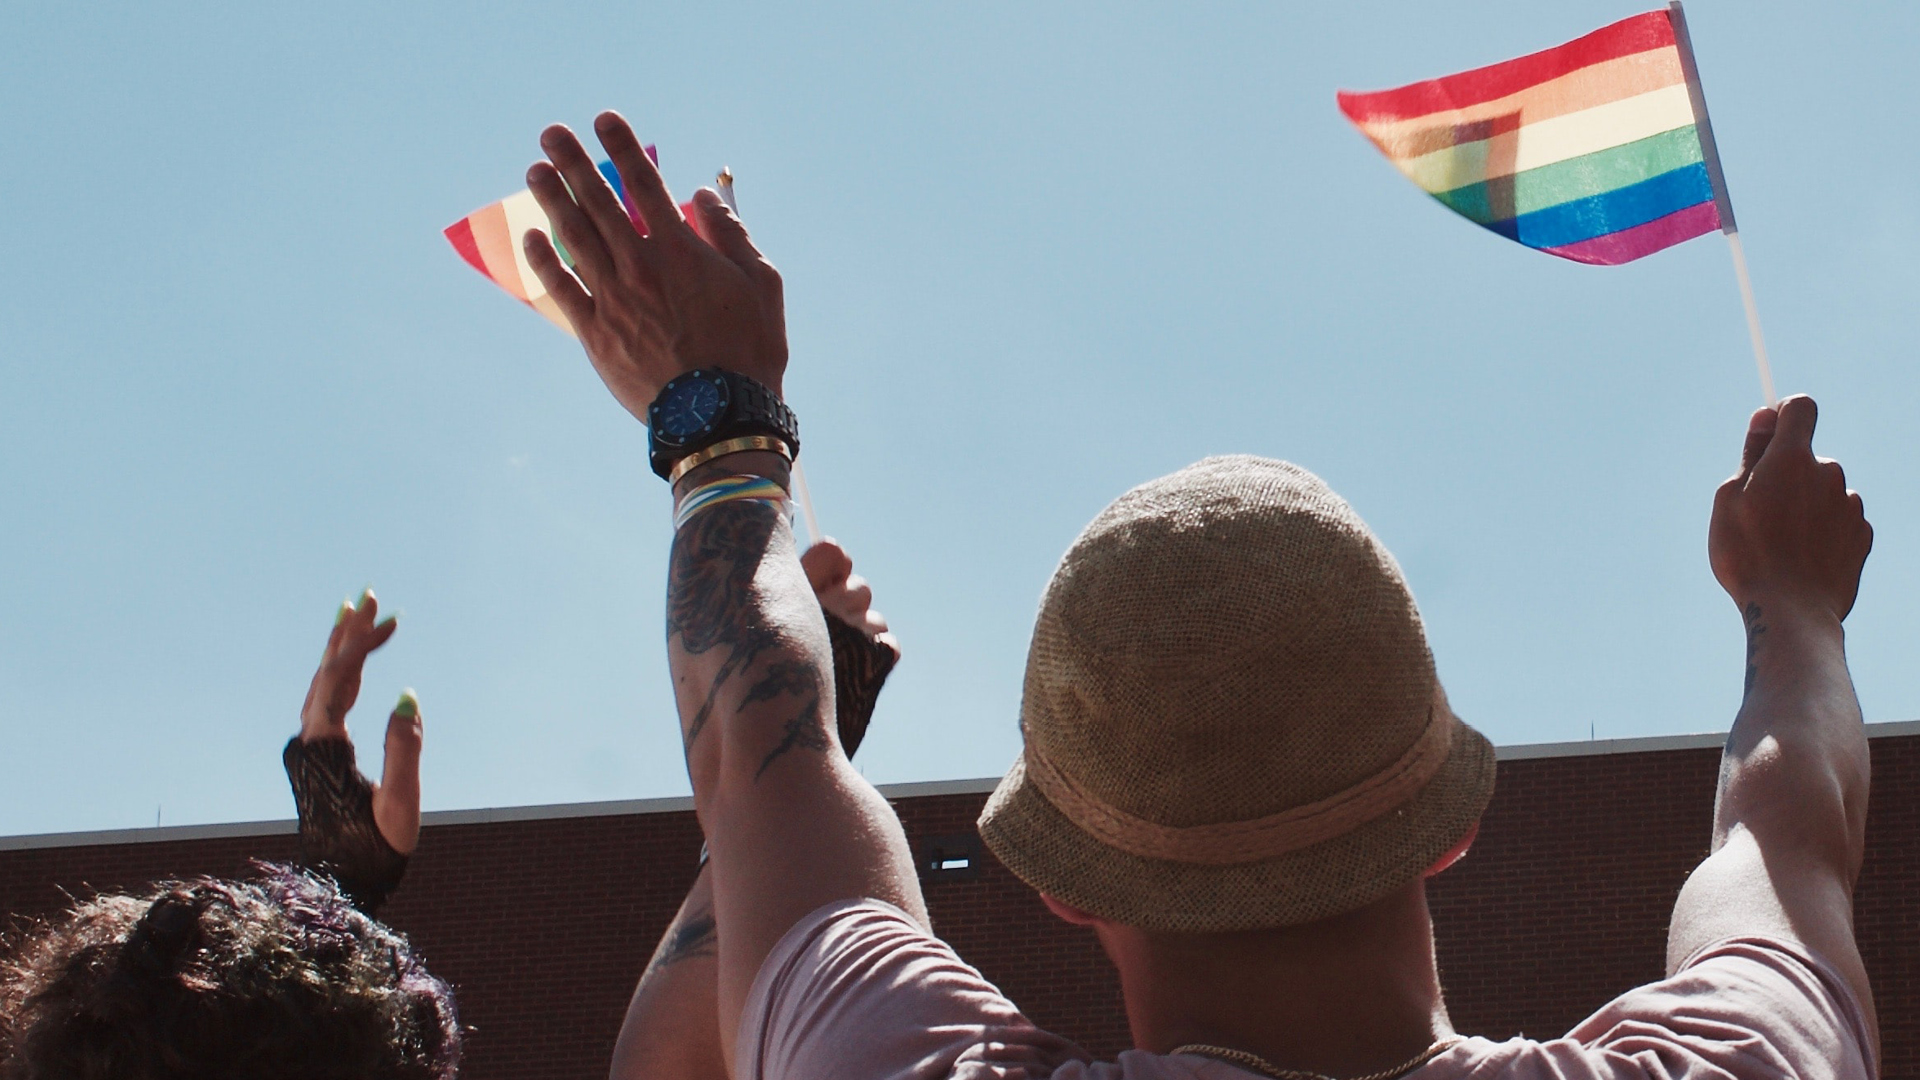 Protesters waving the rainbowflag